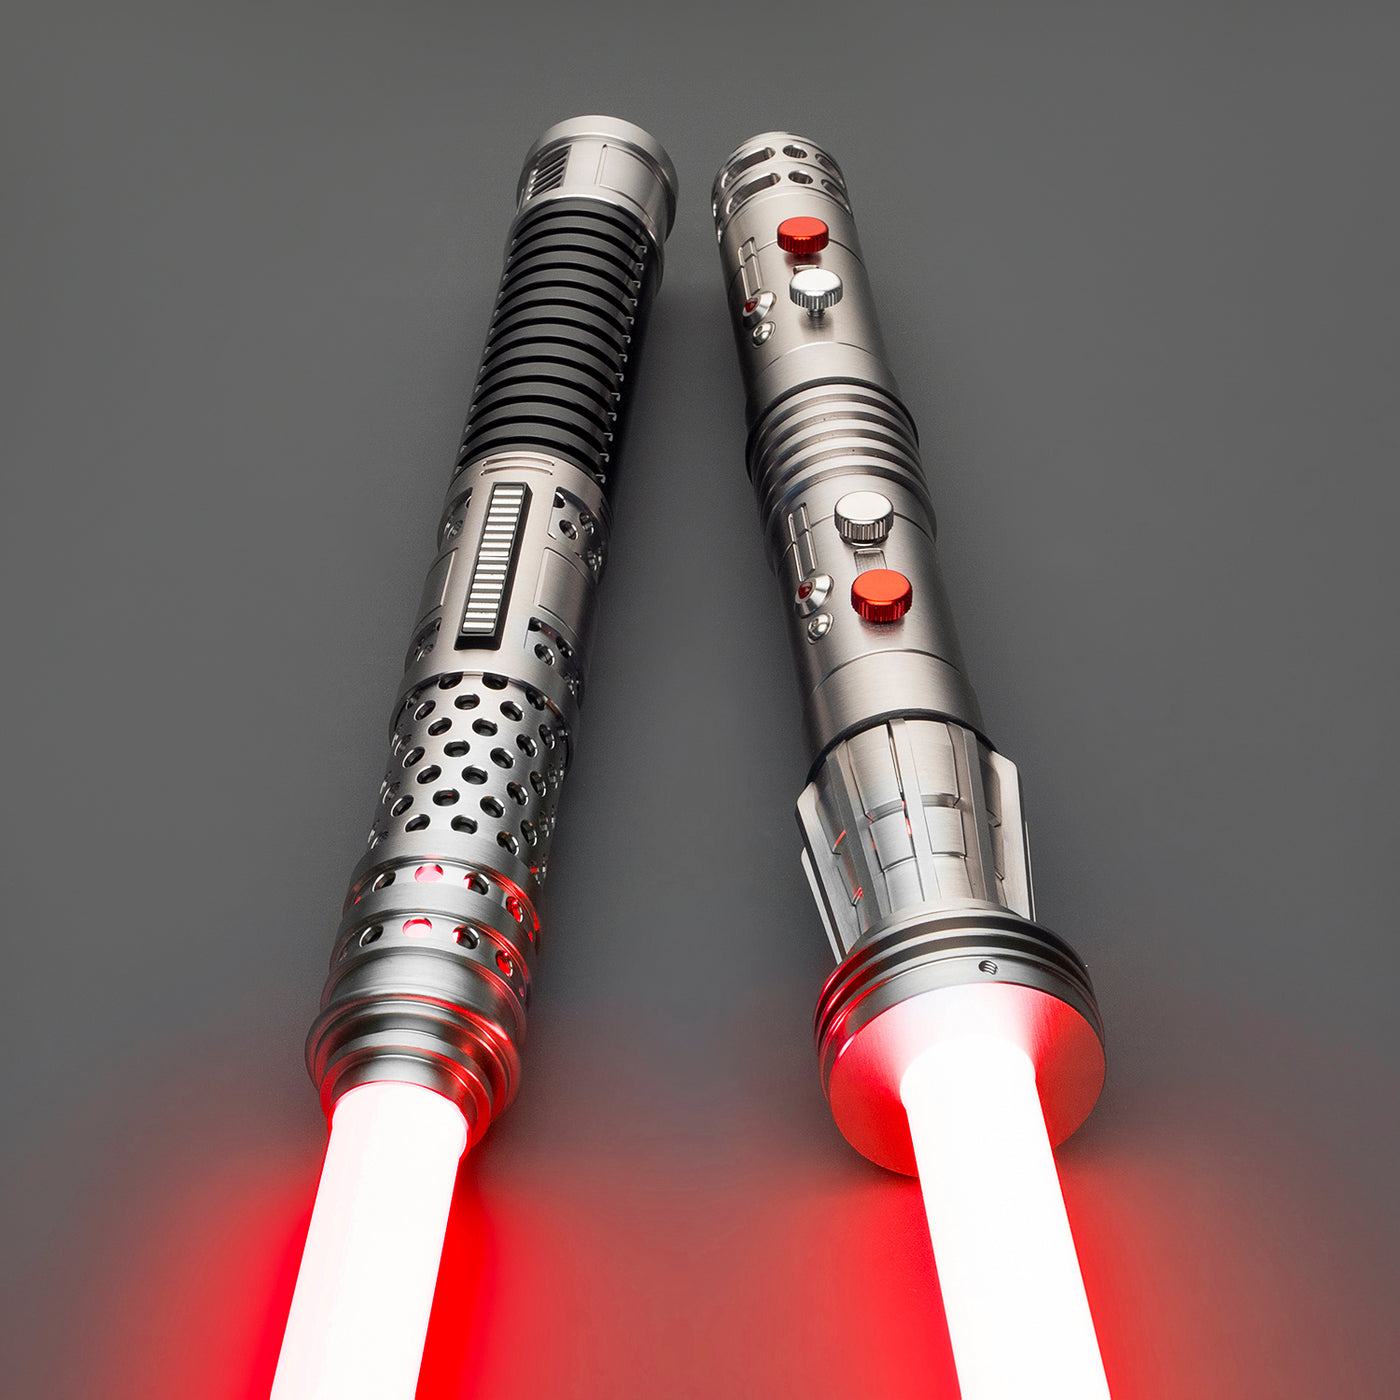 Hybrid Saberstaff - KenJo Sabers - Premium RGB Baselit - Star Wars Lightsaber replica Jedi Sith - Best sabershop Europe - Nederland light sabers kopen -